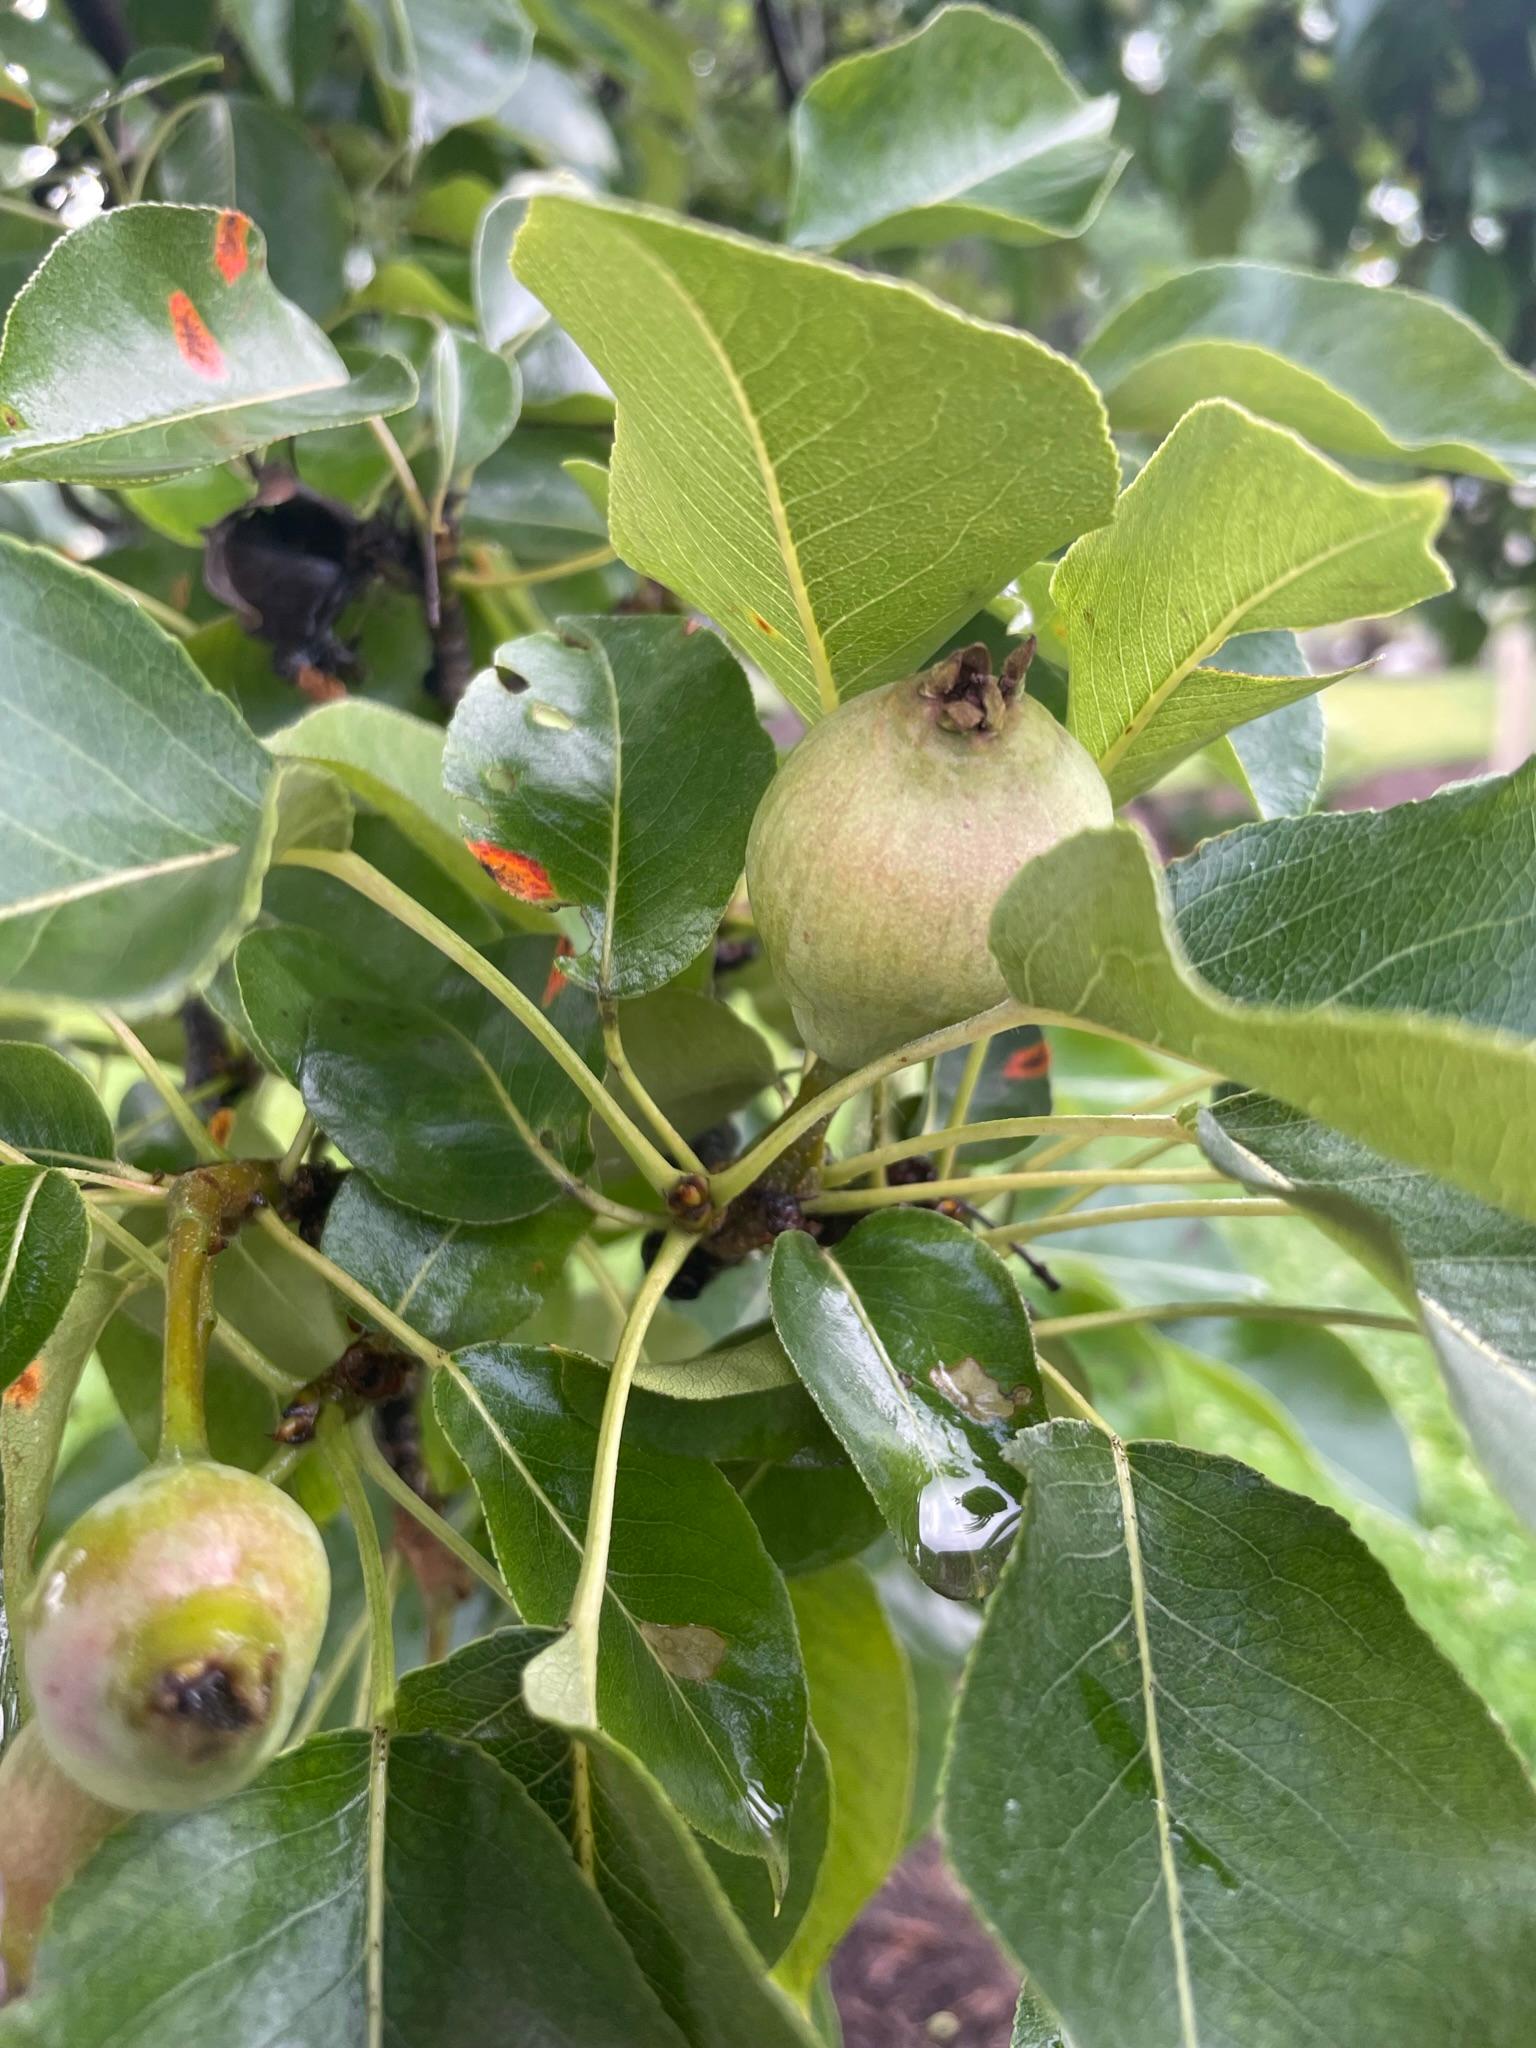 Pear fruitlets